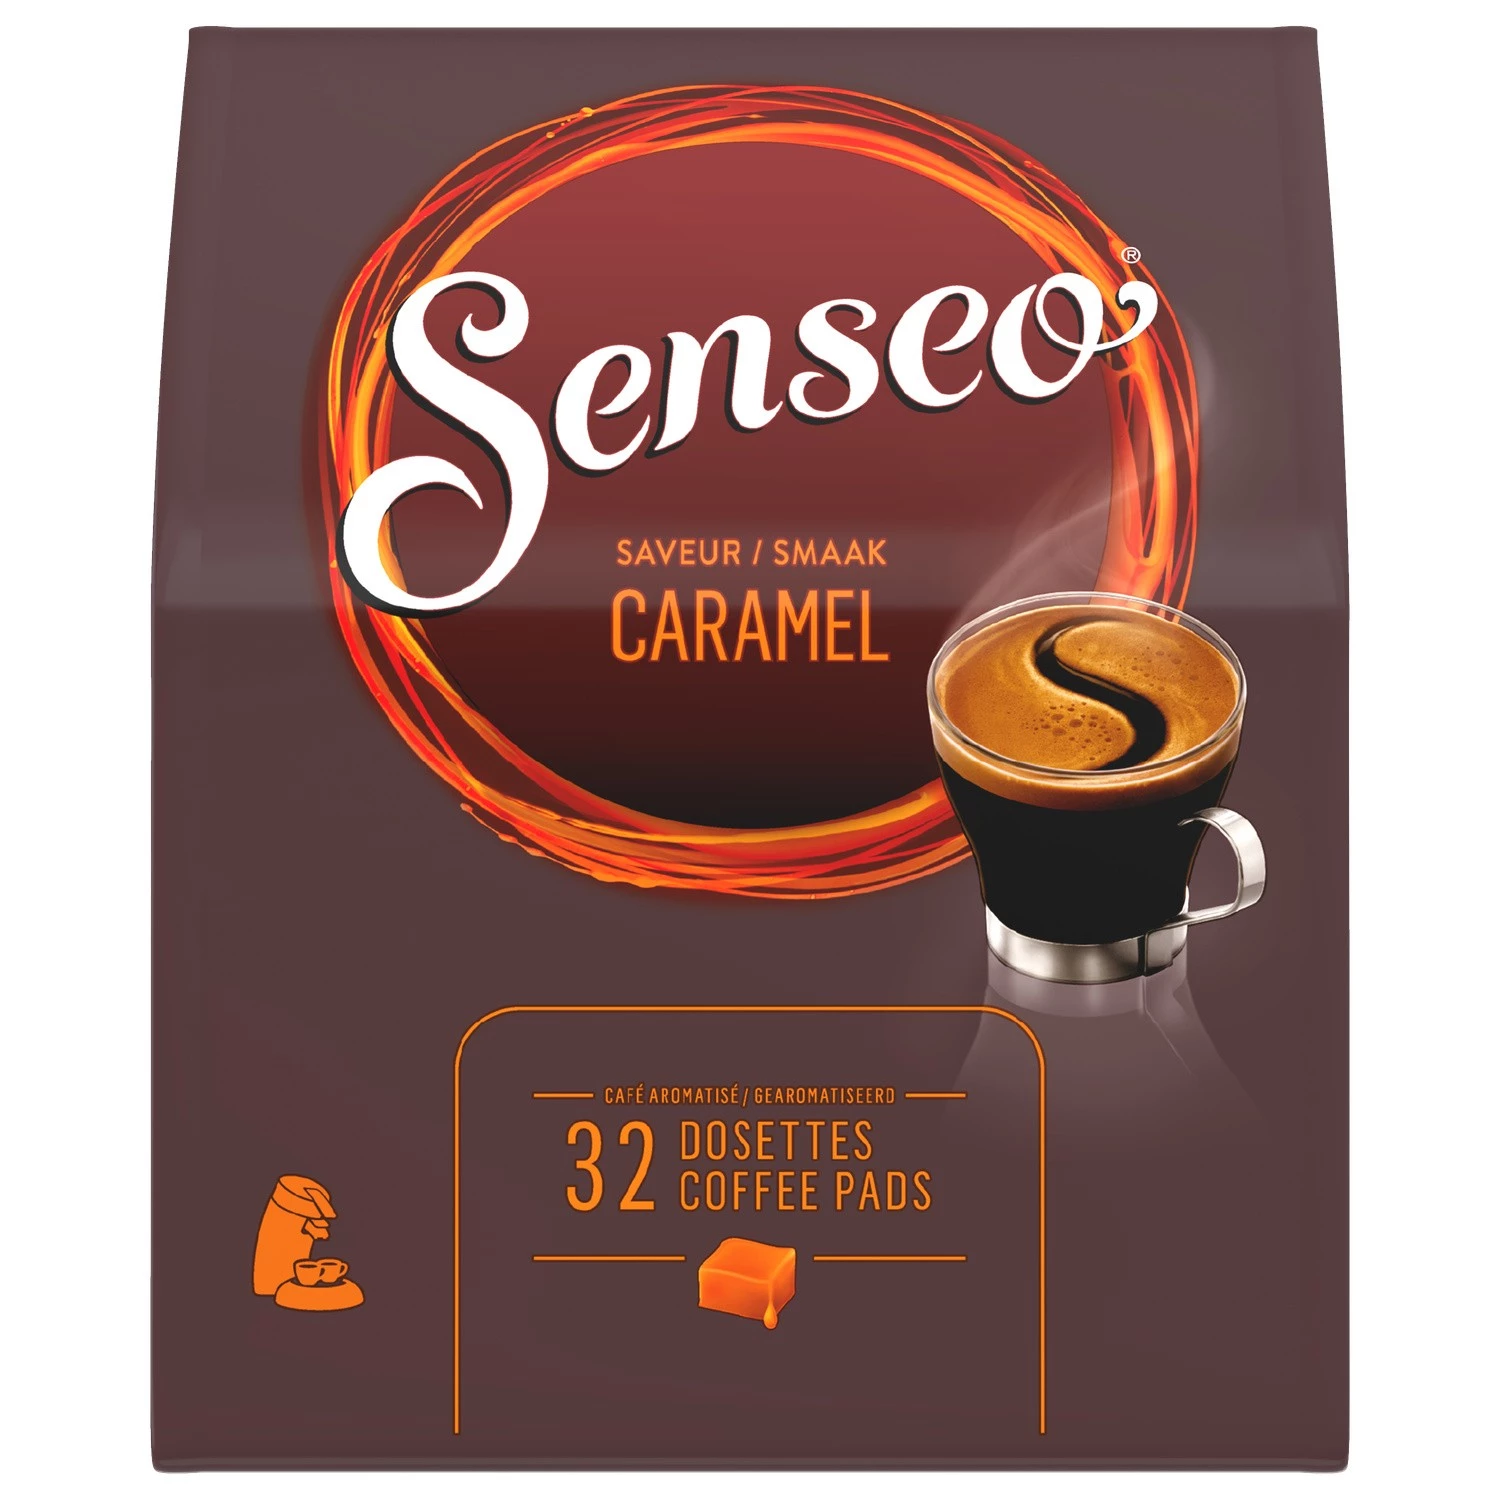 Caramel flavor coffee x32 pods 222g - SENSEO